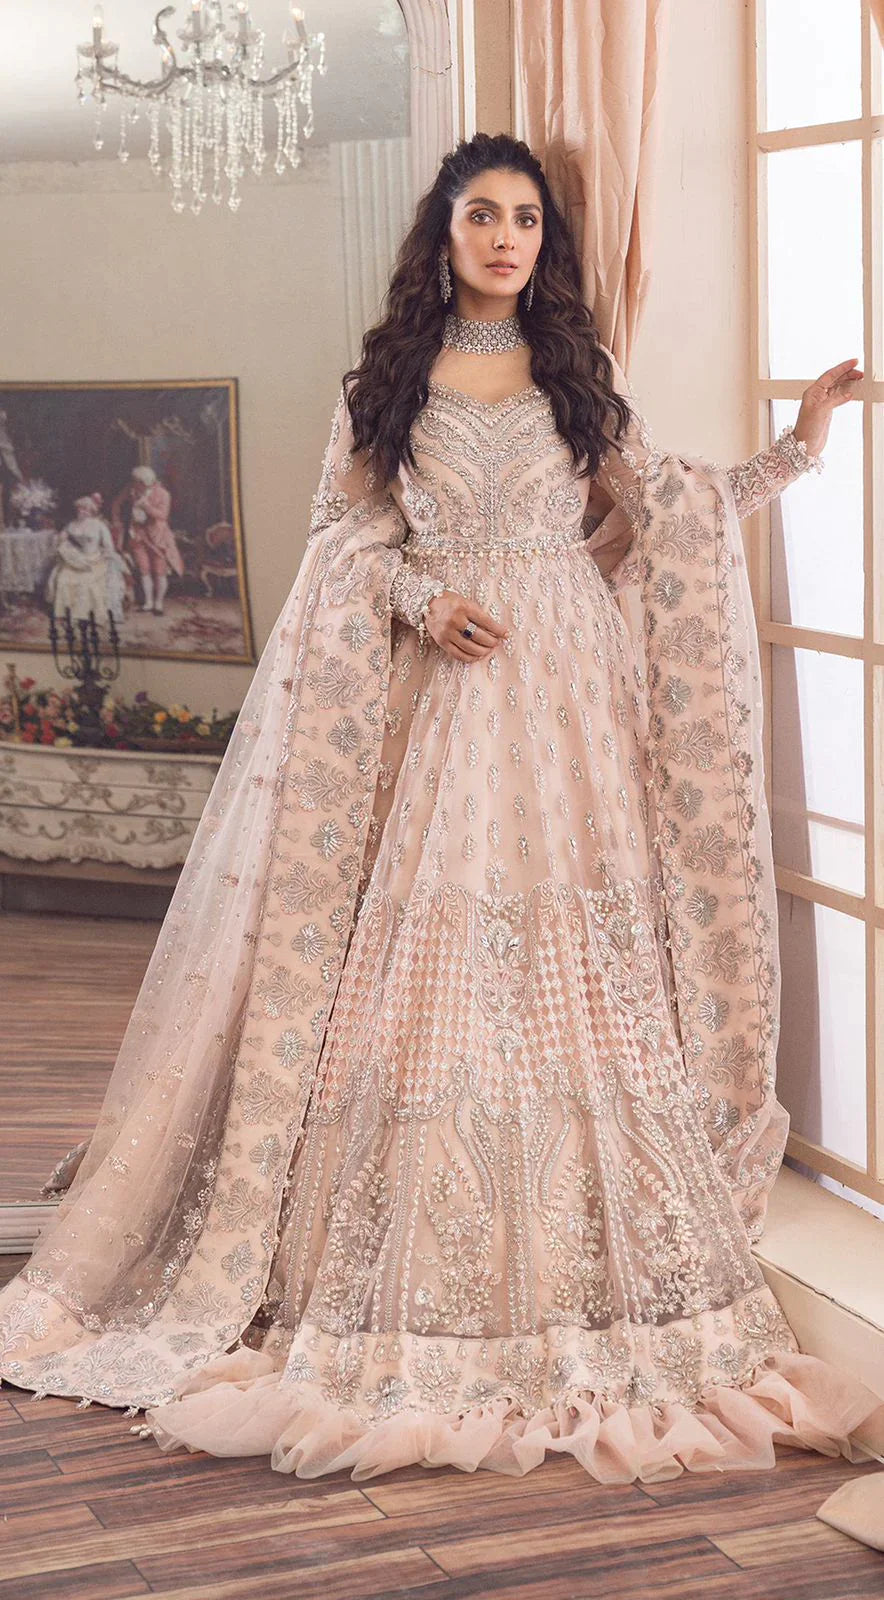 Unstitched Bridal Dresses & Suits for Ladies Online in Pakistan | Easternfashion.pk